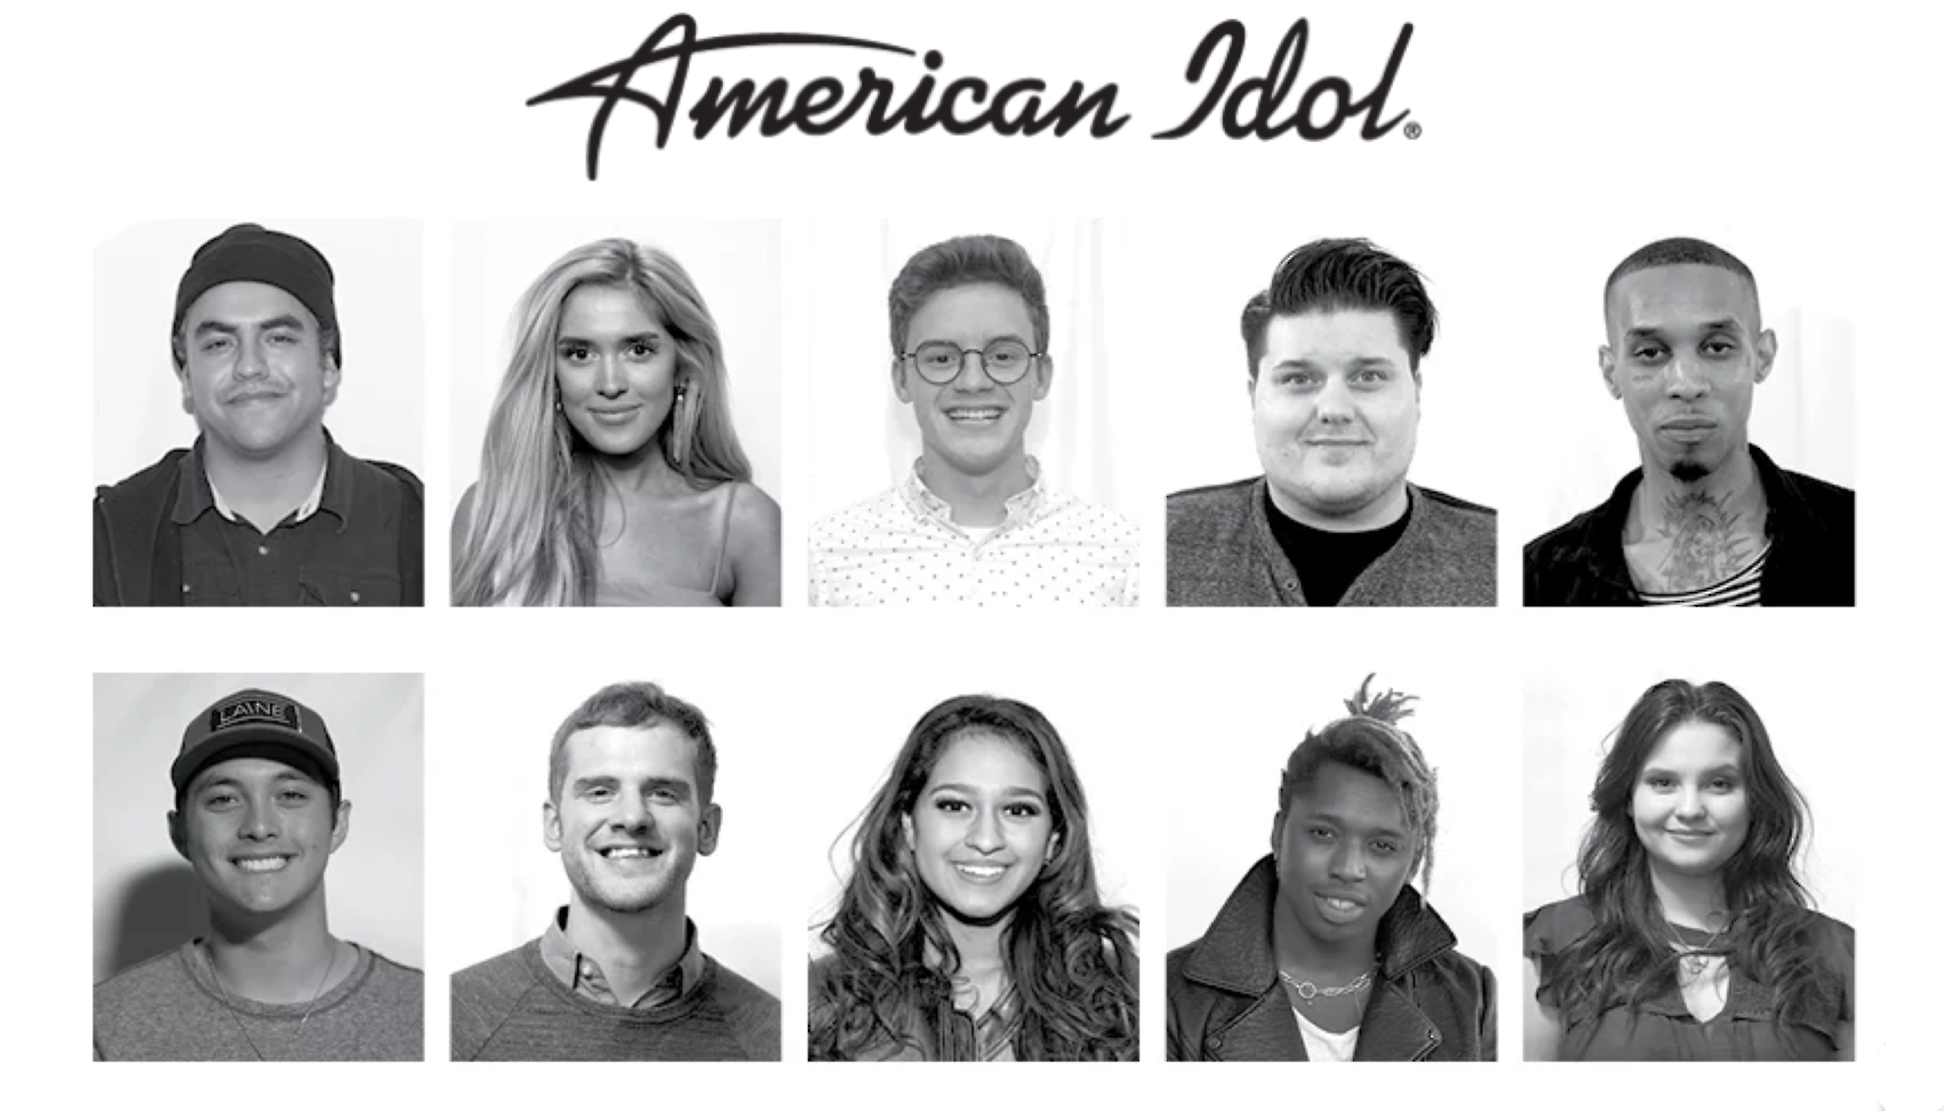 American Idol stars